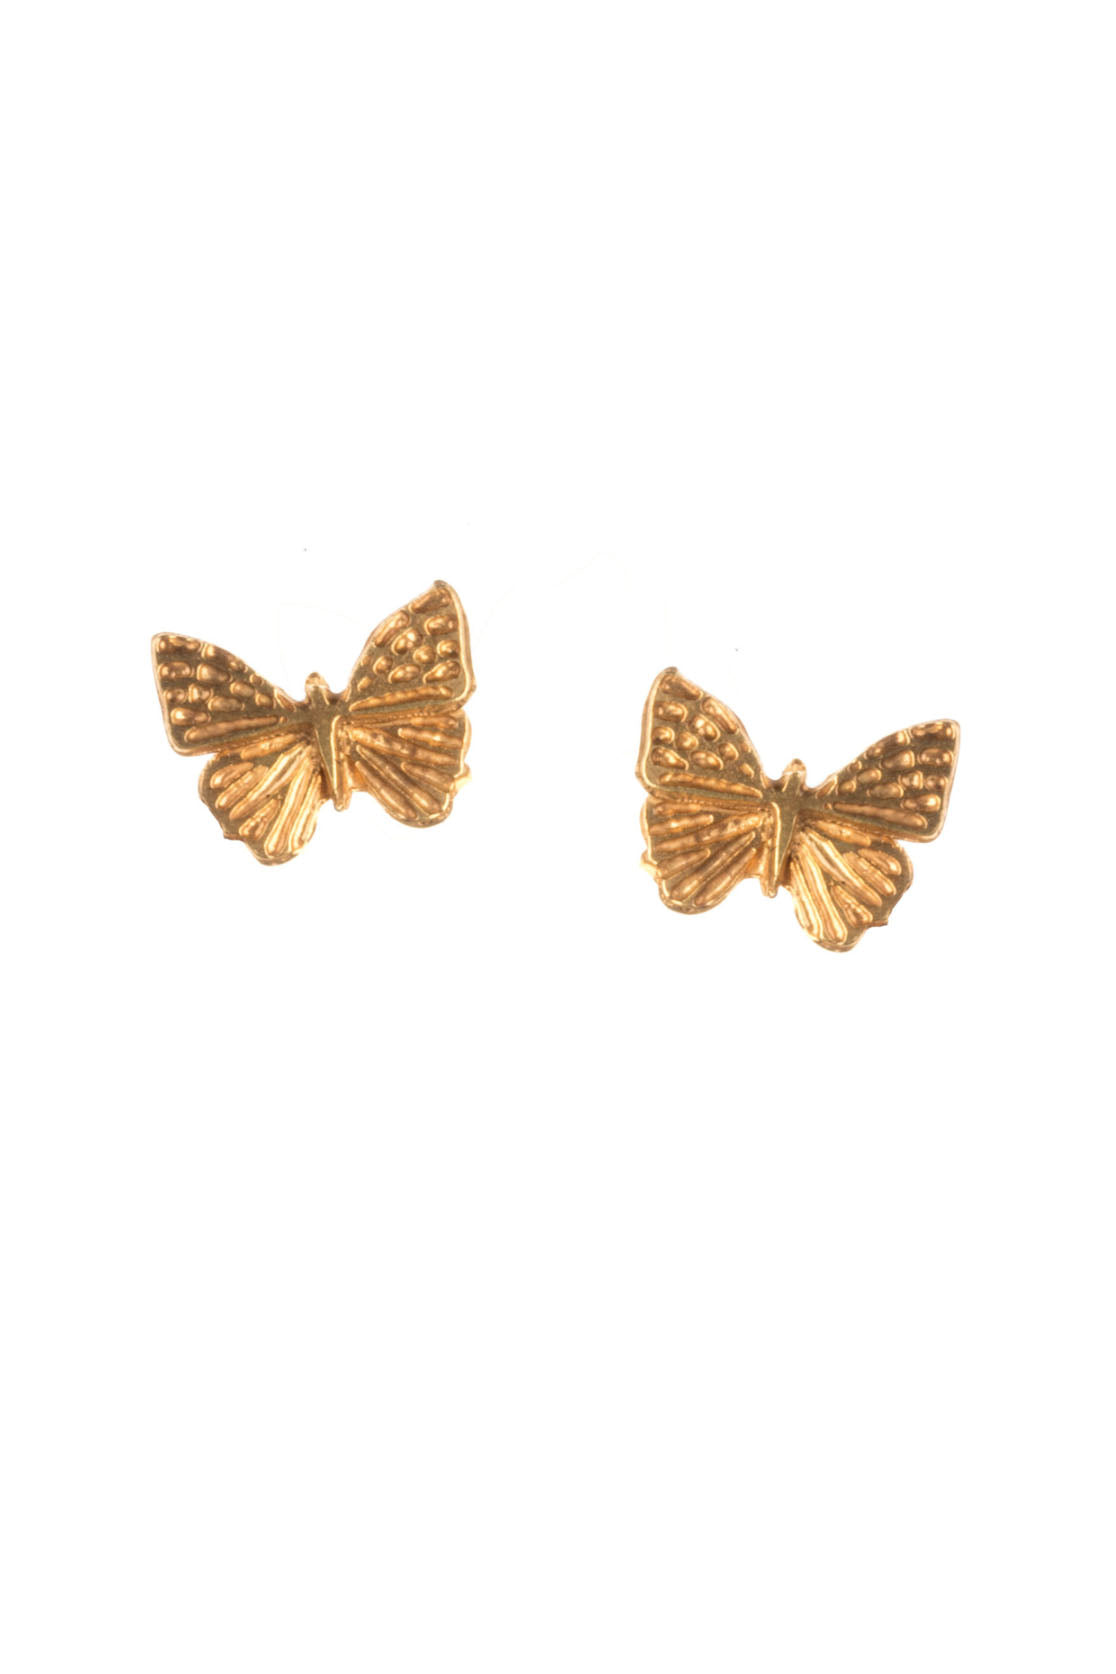 Sterling Silver or Gold Butterfly Earrings - Mini Studs